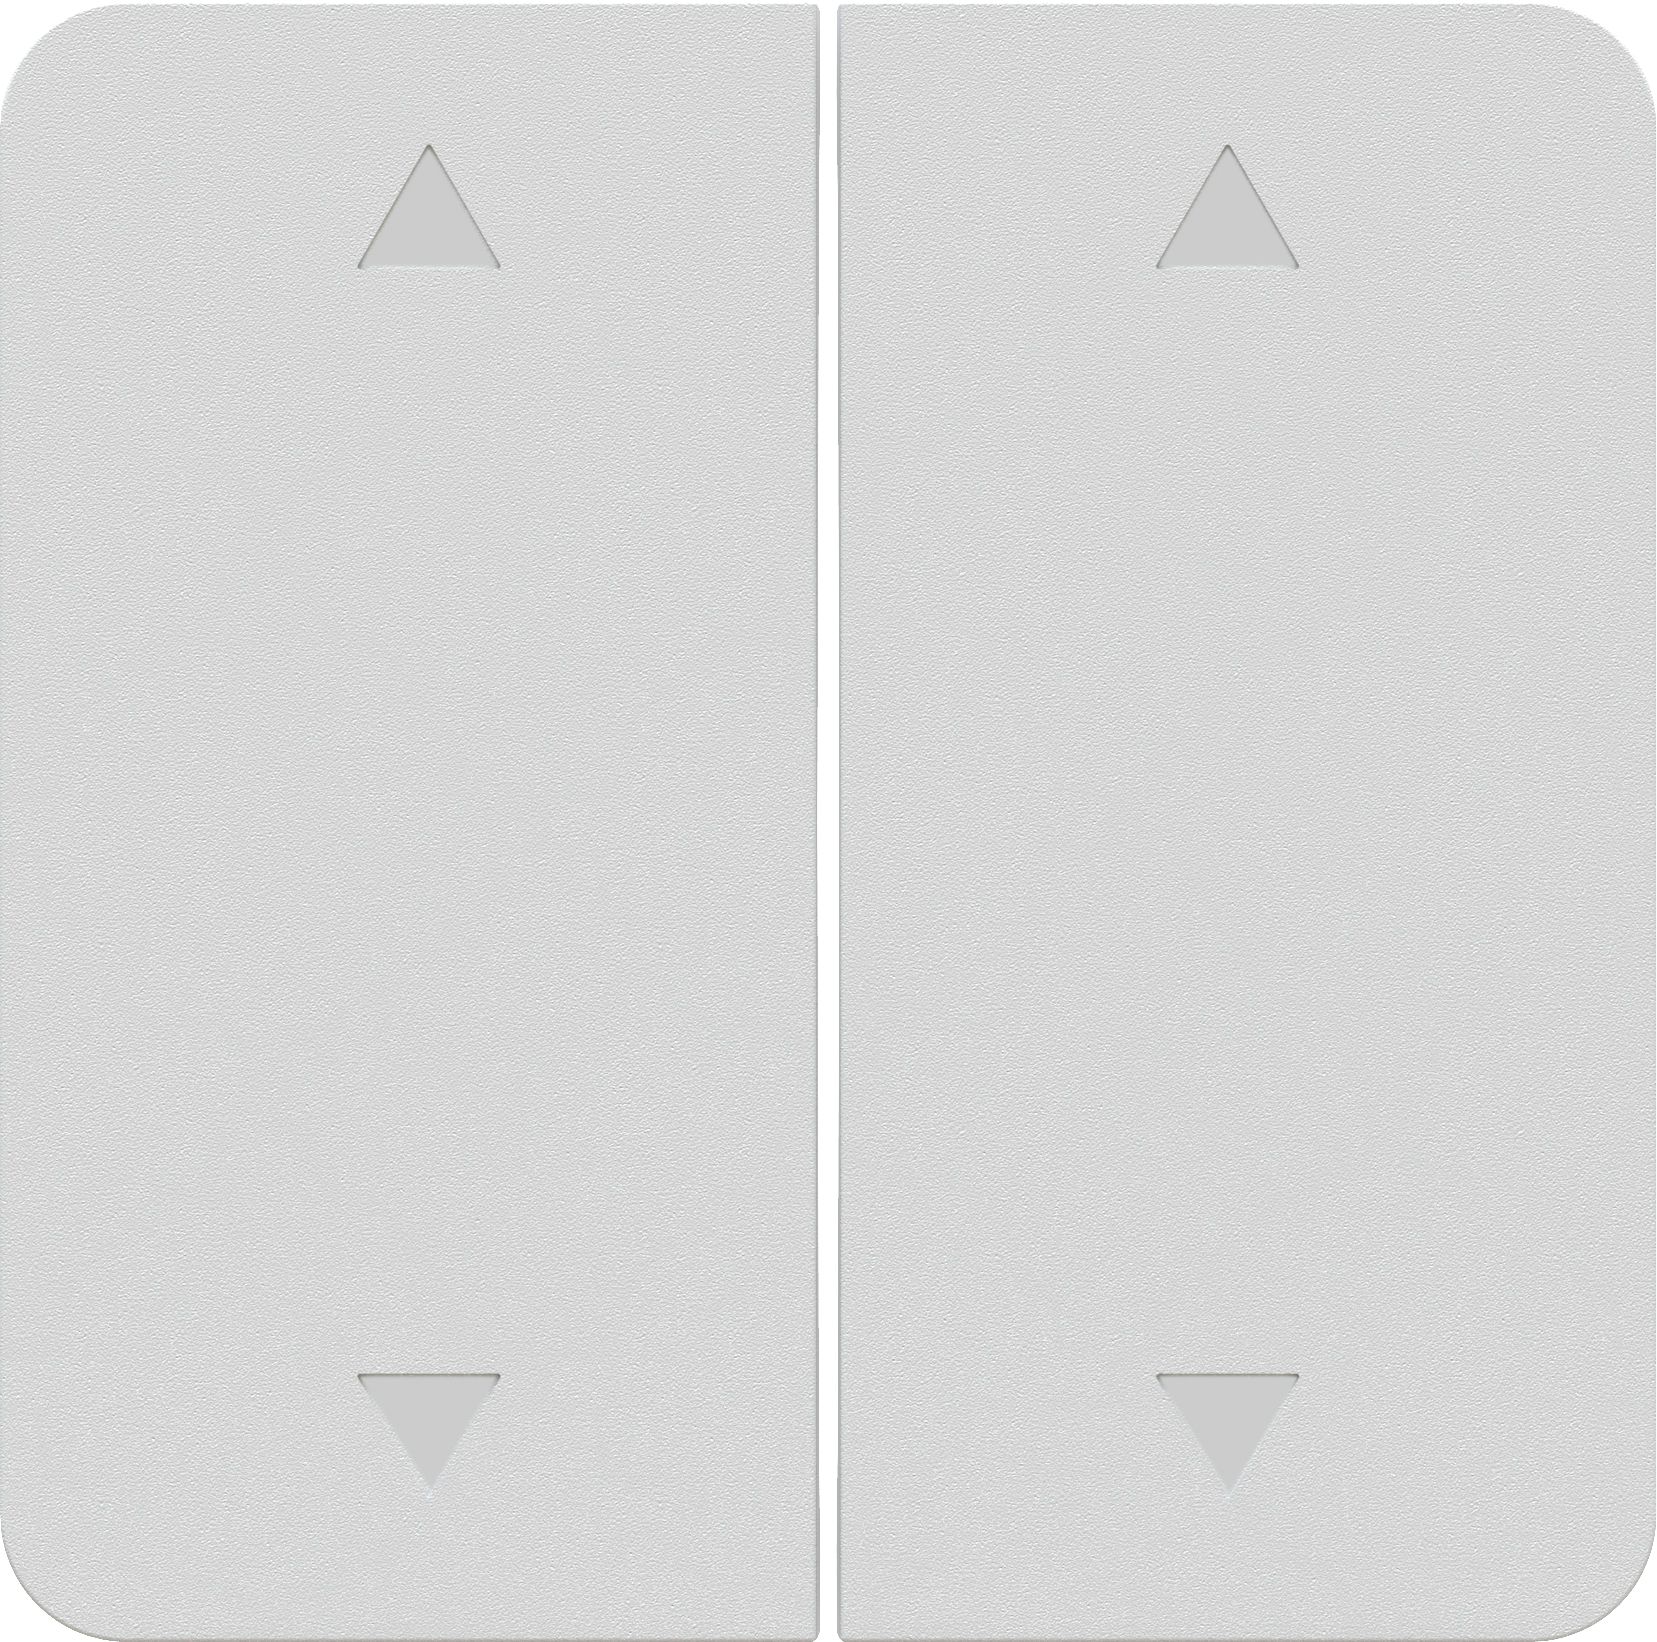 Doppel-Wippschalter/-taster 2x Storen Frontplatte priamos weiss